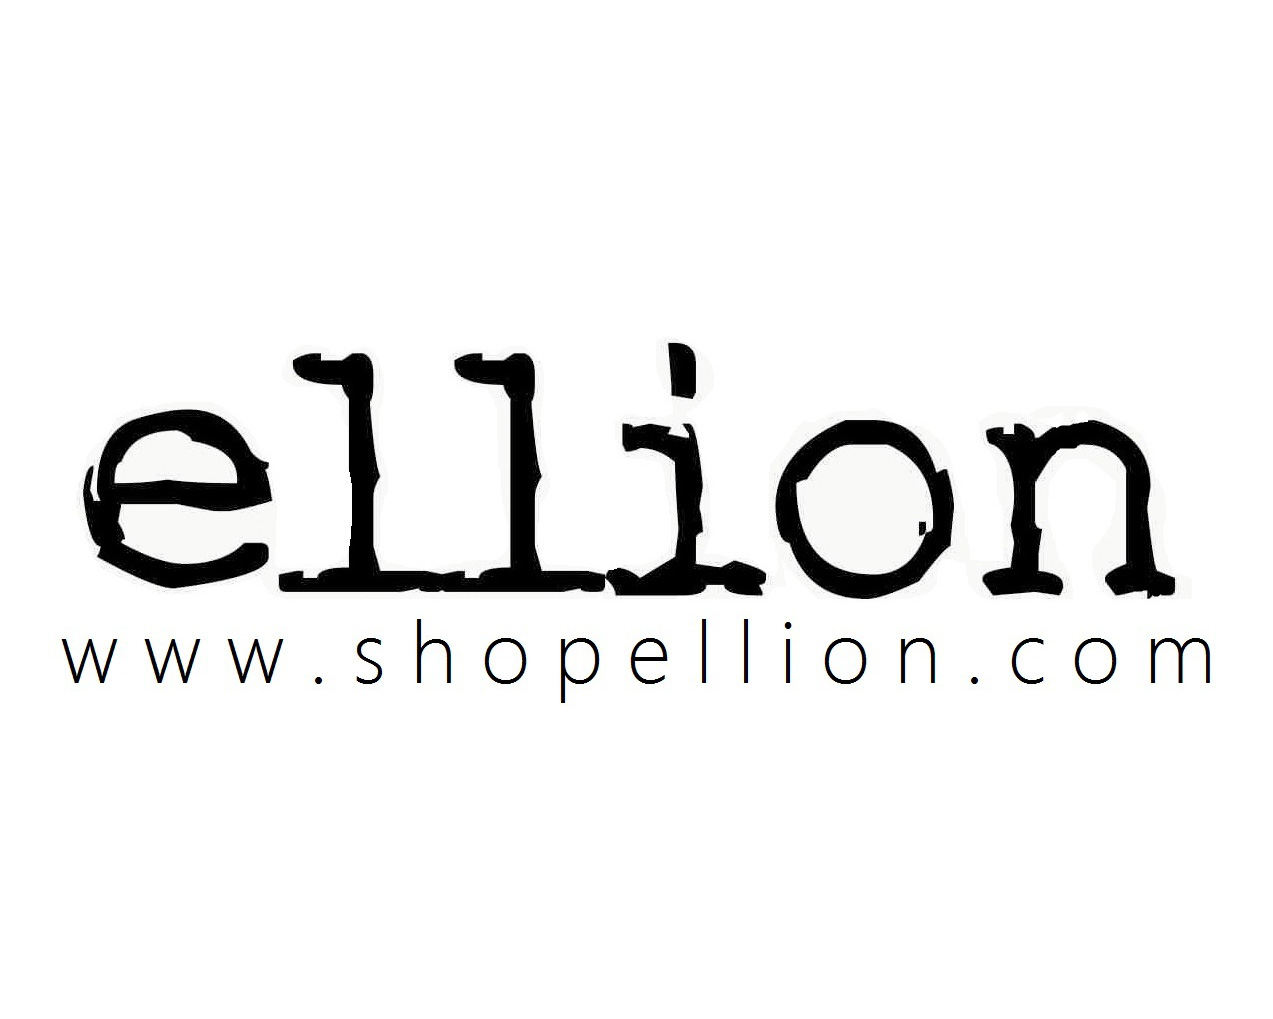 FINAL - ellion logo with website-1.jpg